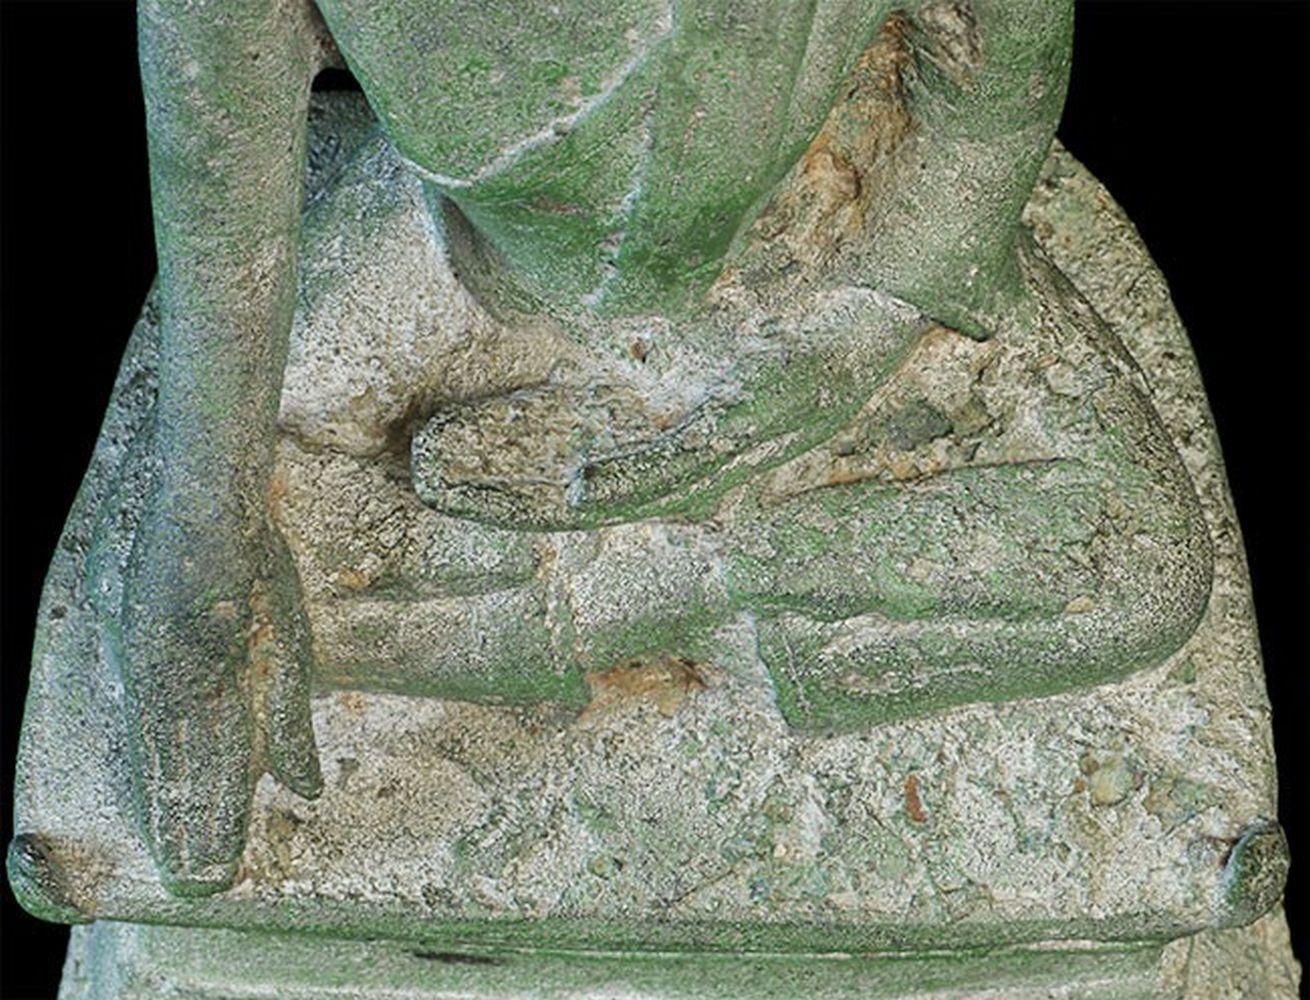  11. Jh. Bronze Buddha- Pyu/Pagan Burma Seltene, mächtige Antike- TL Test! - 8439 im Angebot 5